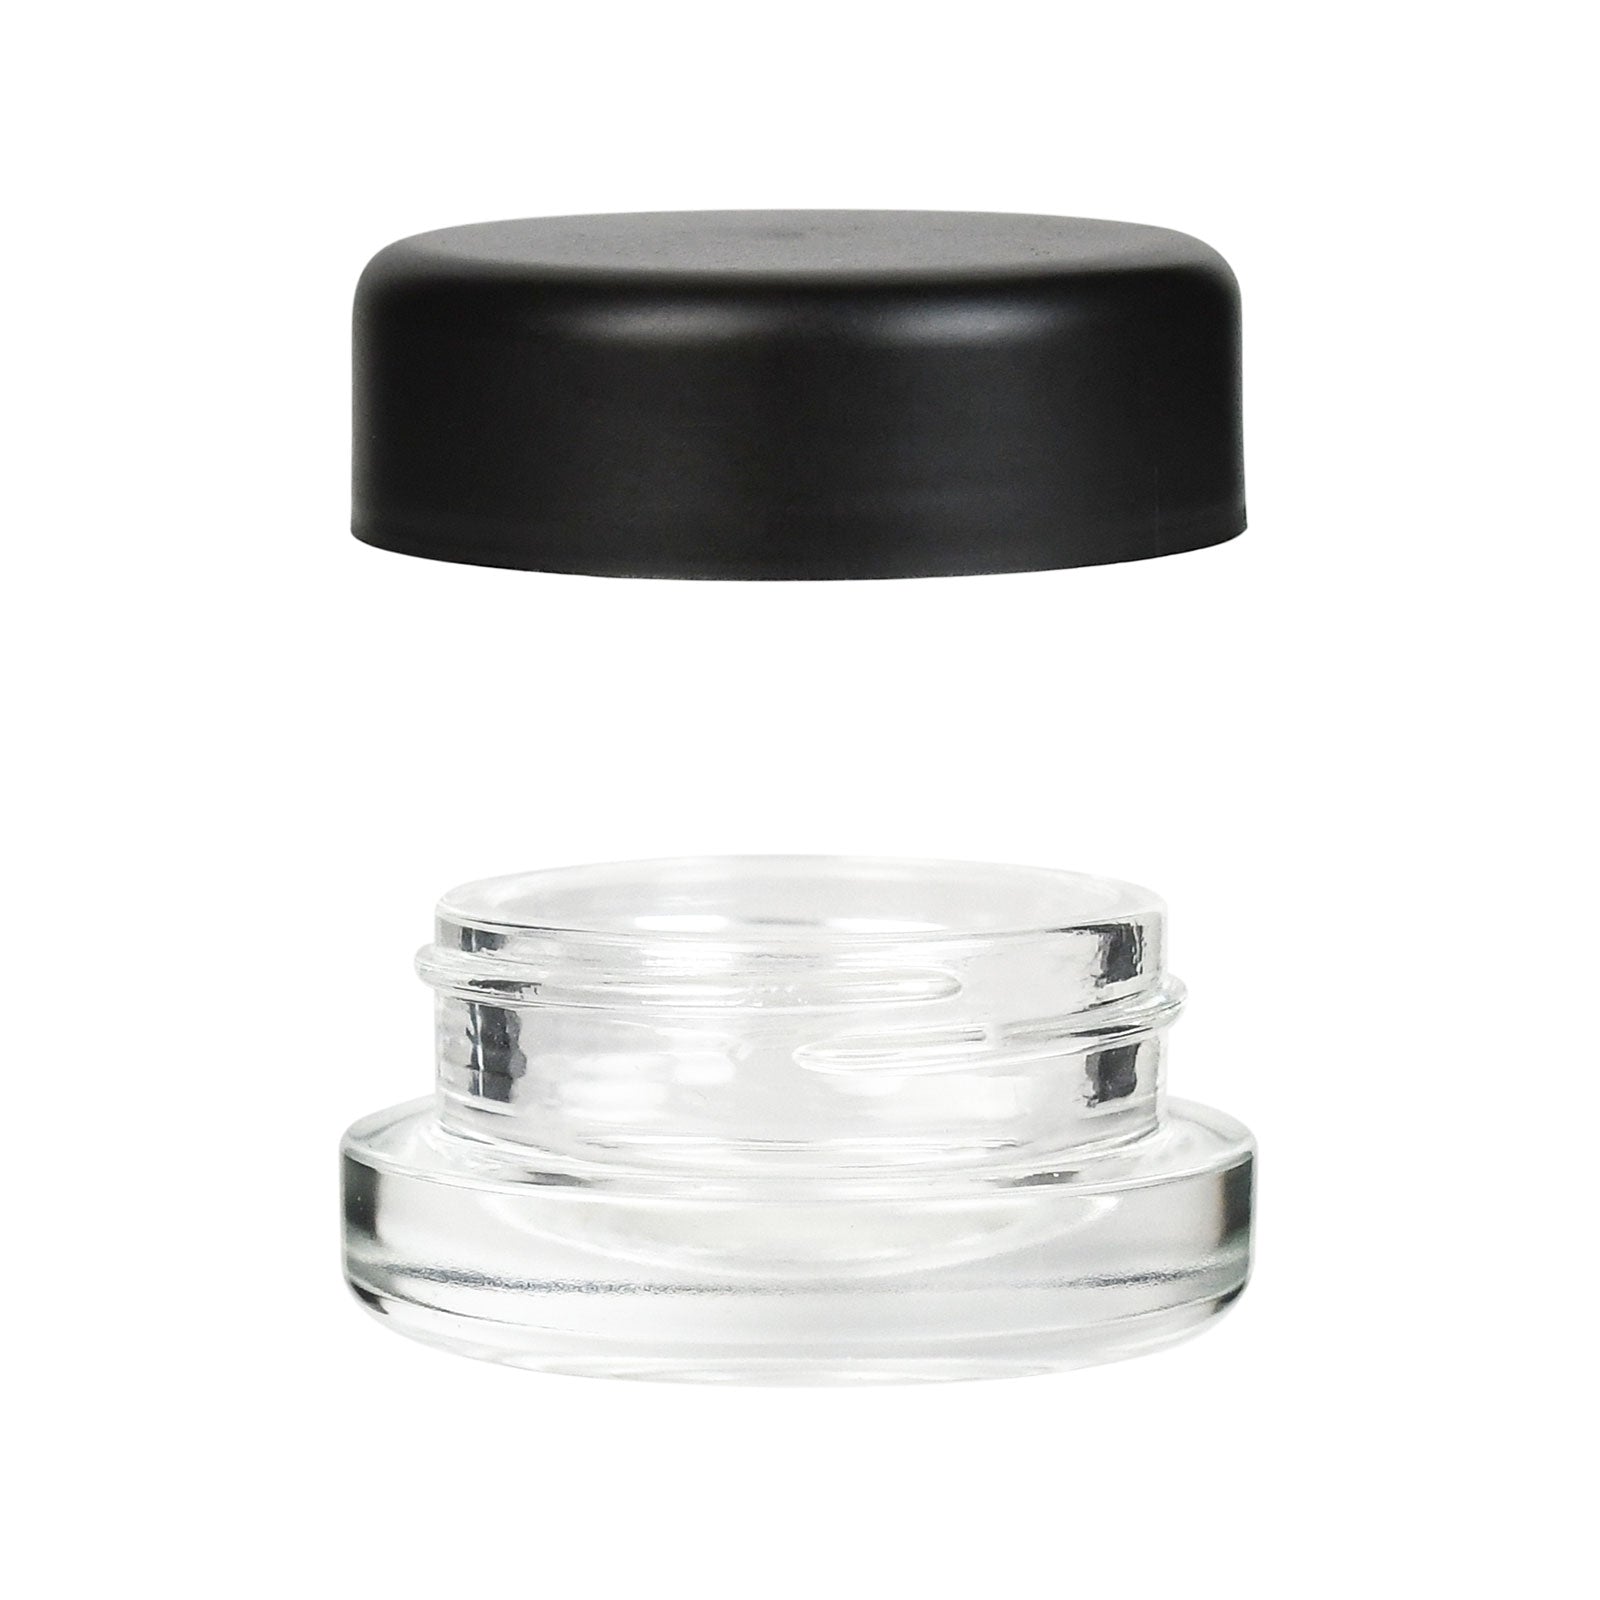 9ml Child Resistant Glass Jar With Black Cap - 2 Gram - 1 Count